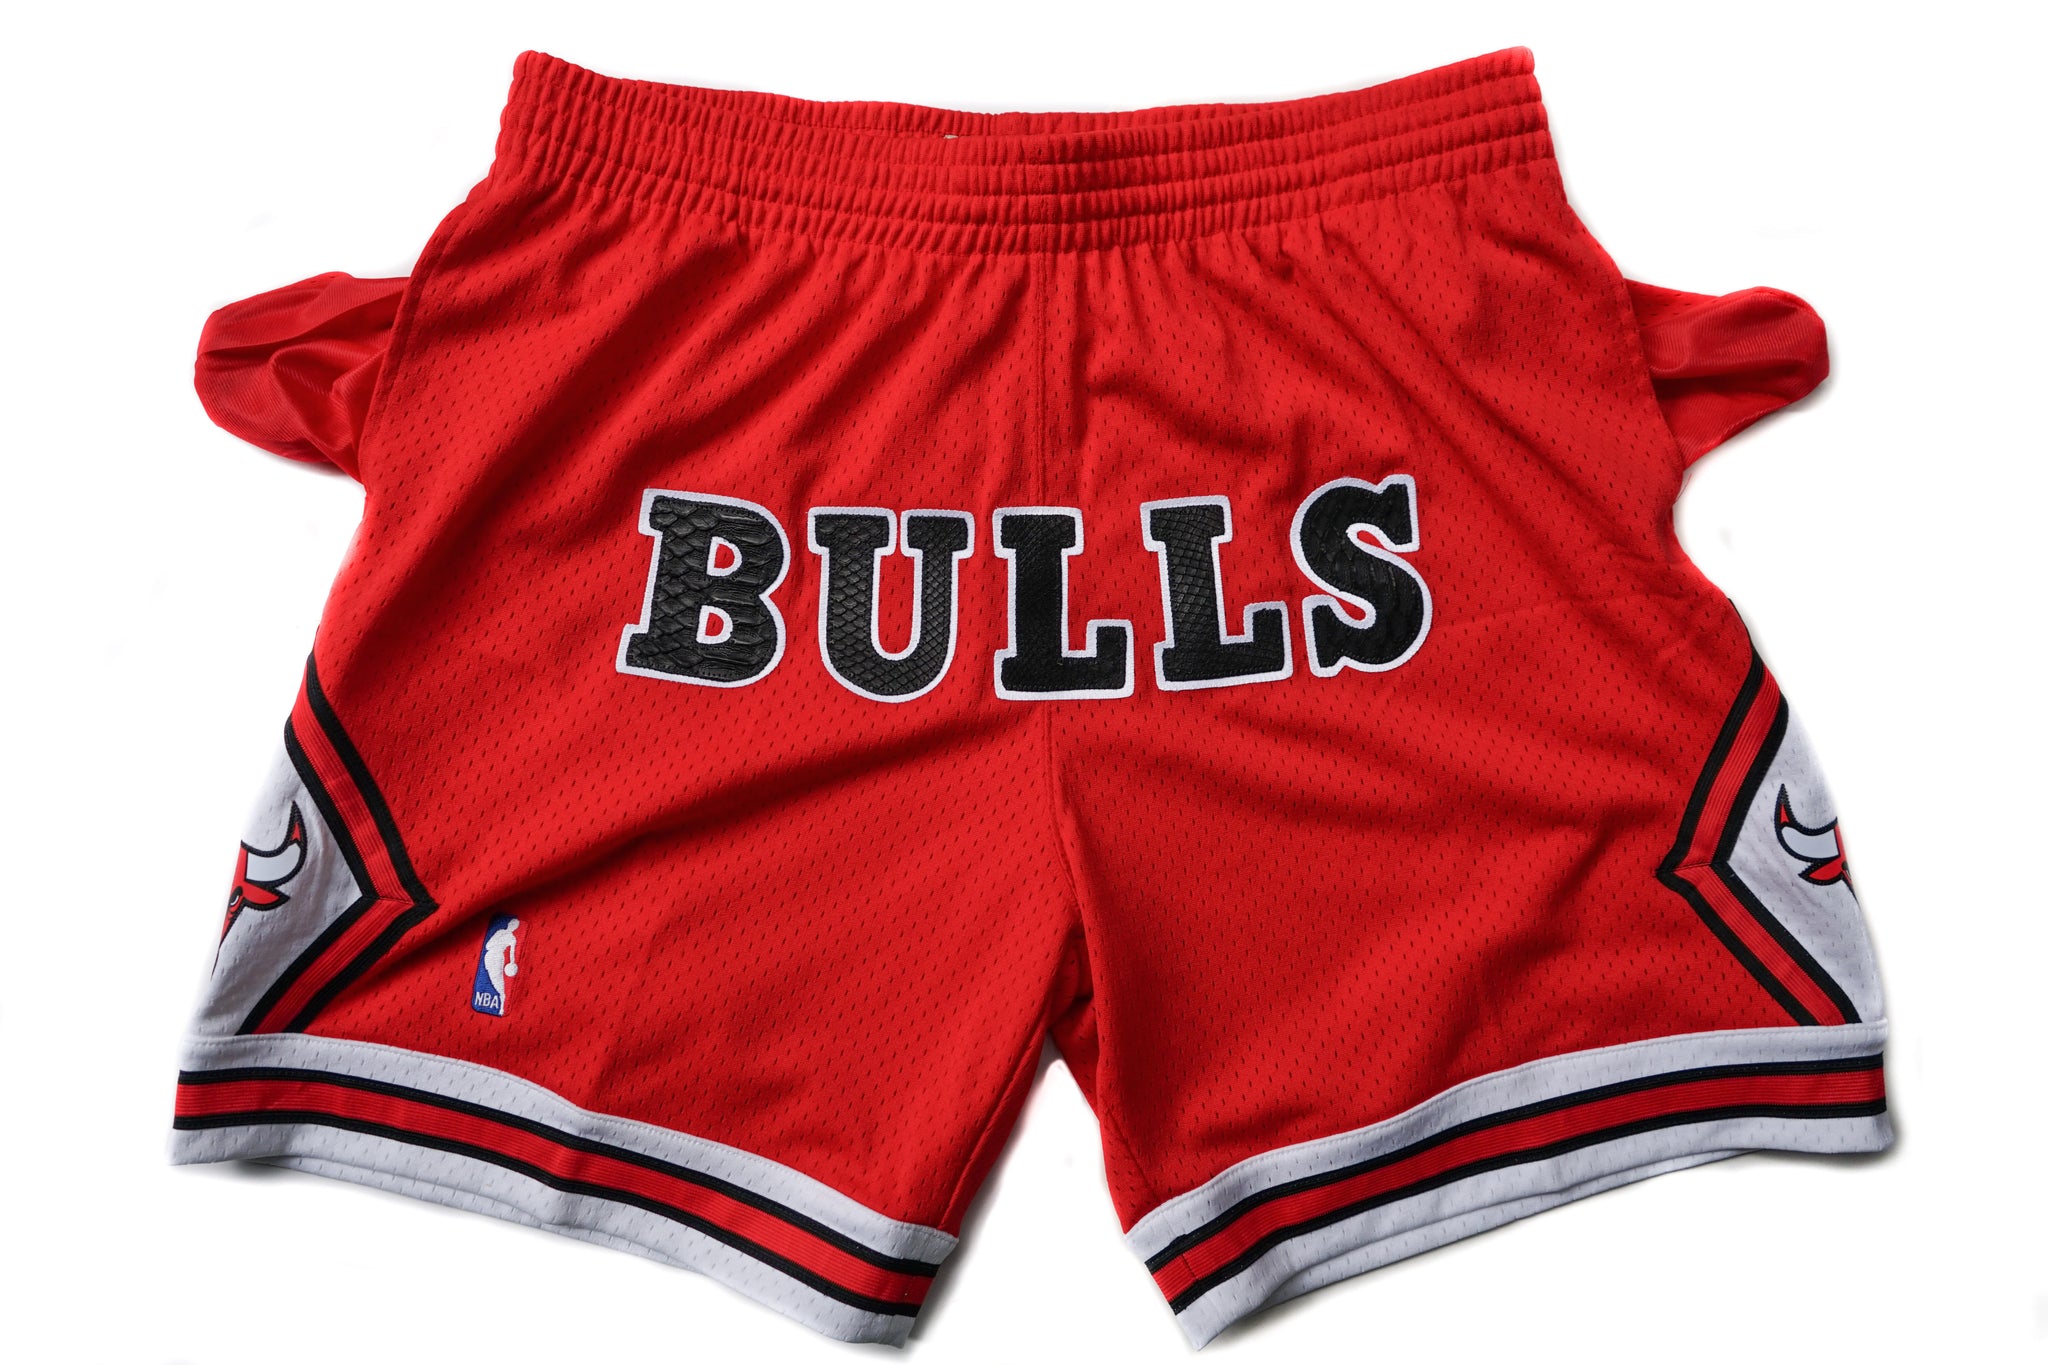 Mitchell & Ness Chicago Bulls "BULLS" Python Shorts (Home)